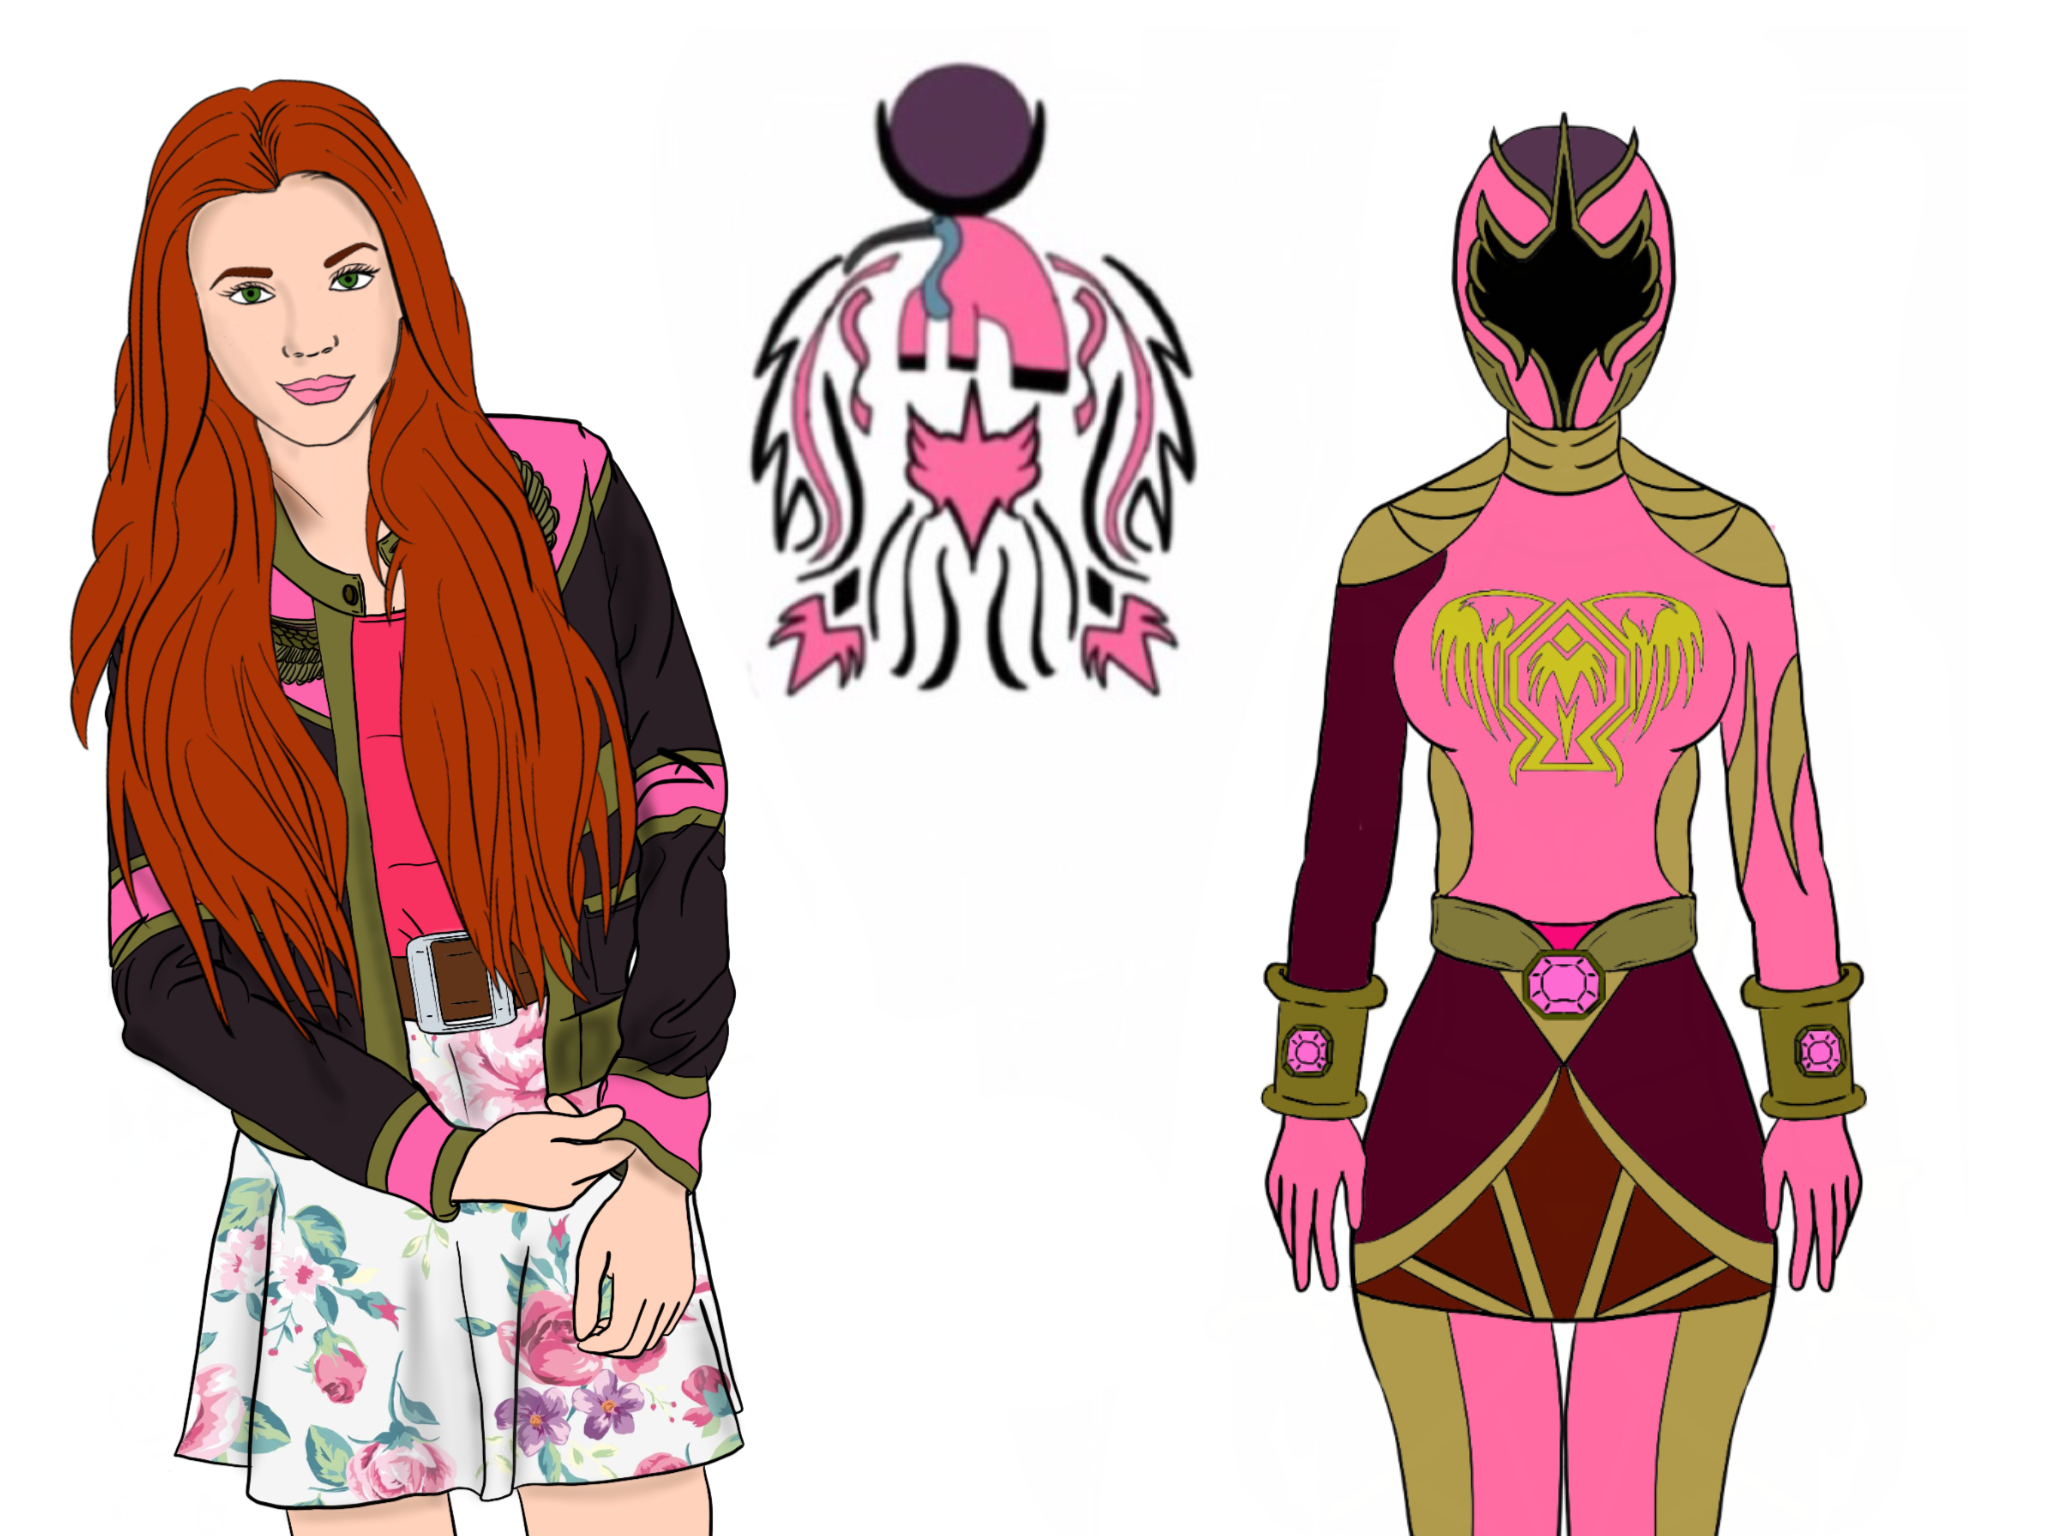 UPDATE! Paige Ricci-Ancient Age Pink Ranger